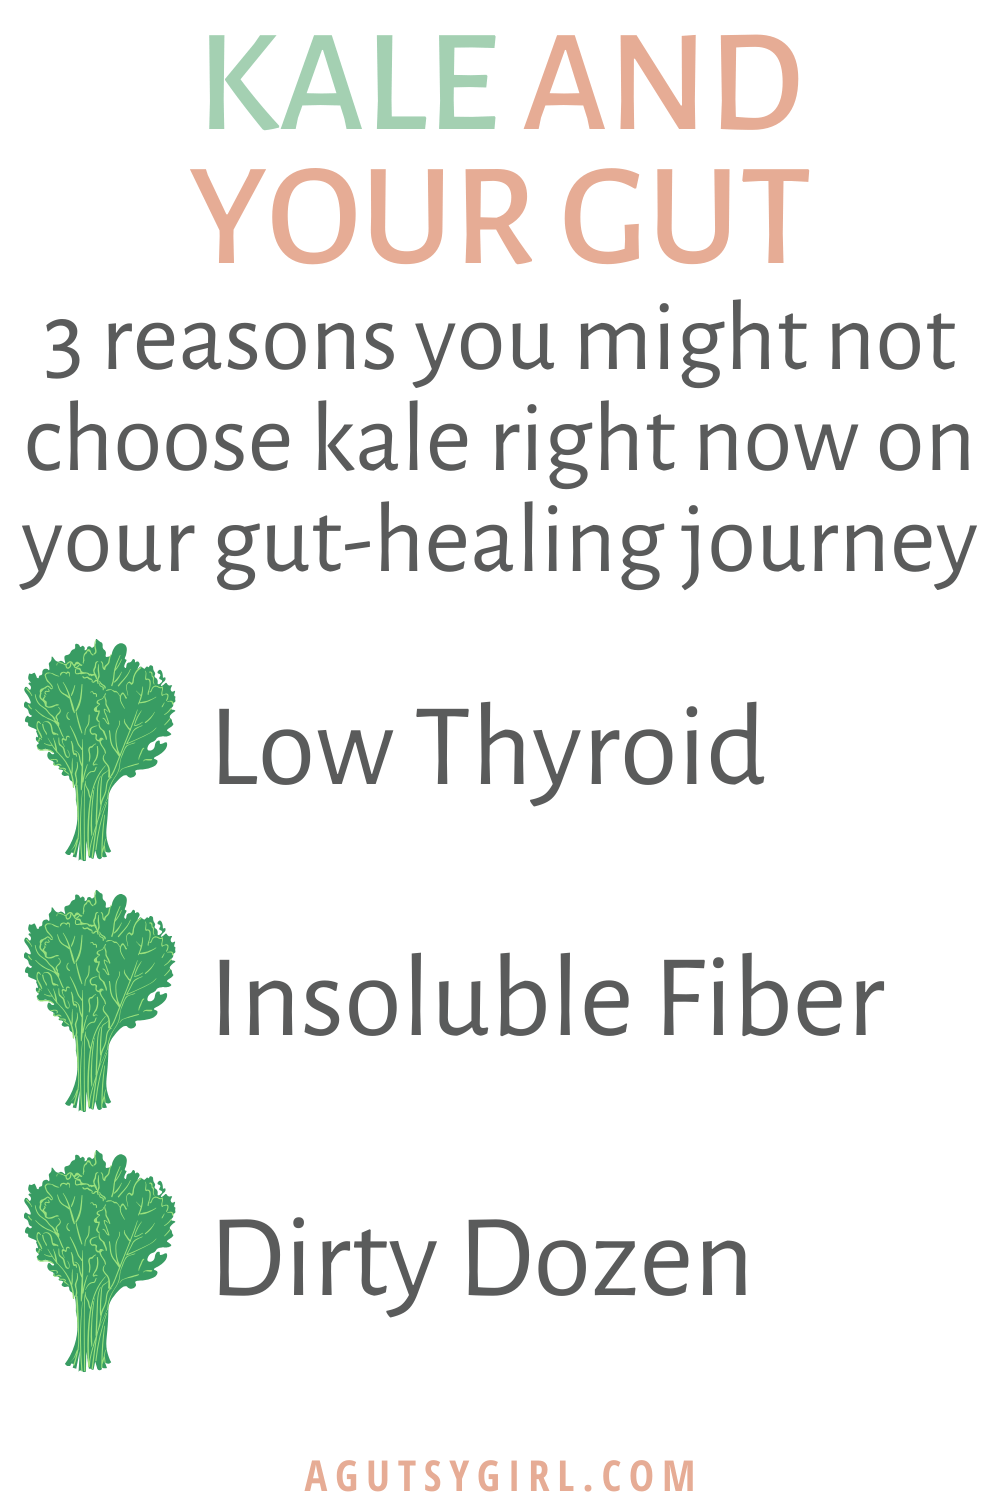 Kale and Your Gut agutsygirl.com #kale #guthealth #vegetables thyroid